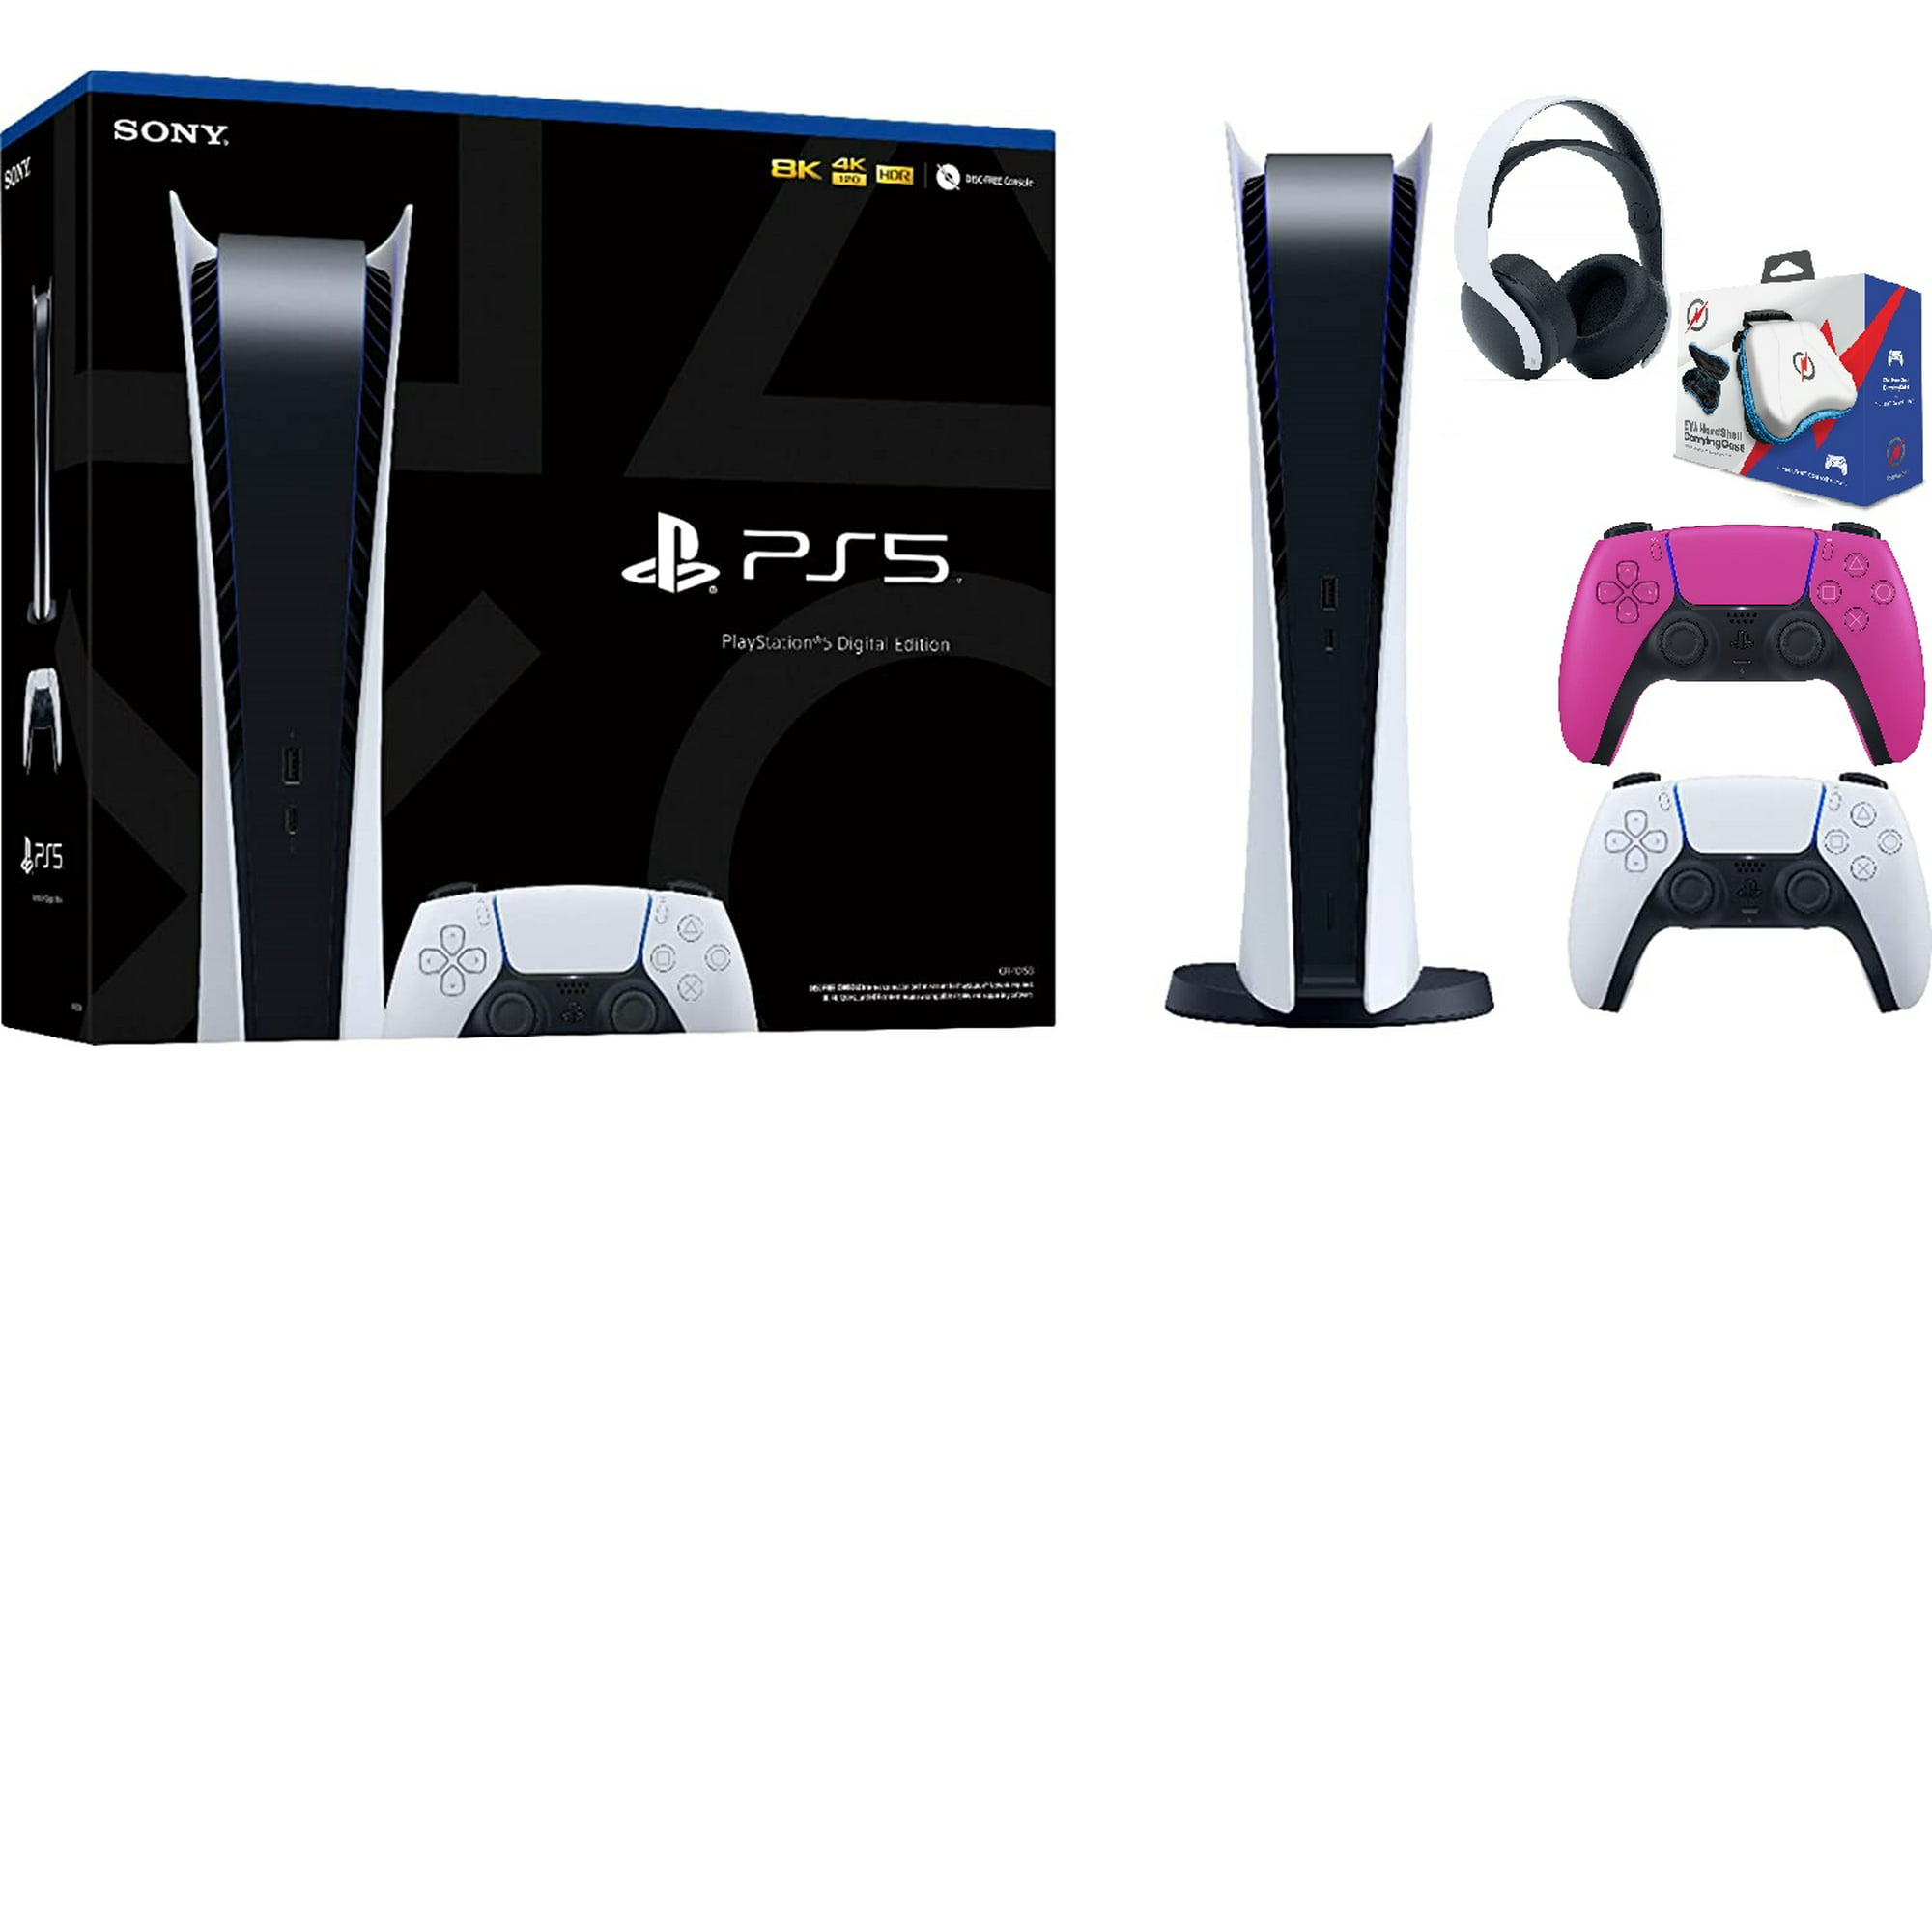 PlayStation 5 Digital Edition with PS5 Nova Pink DualSense